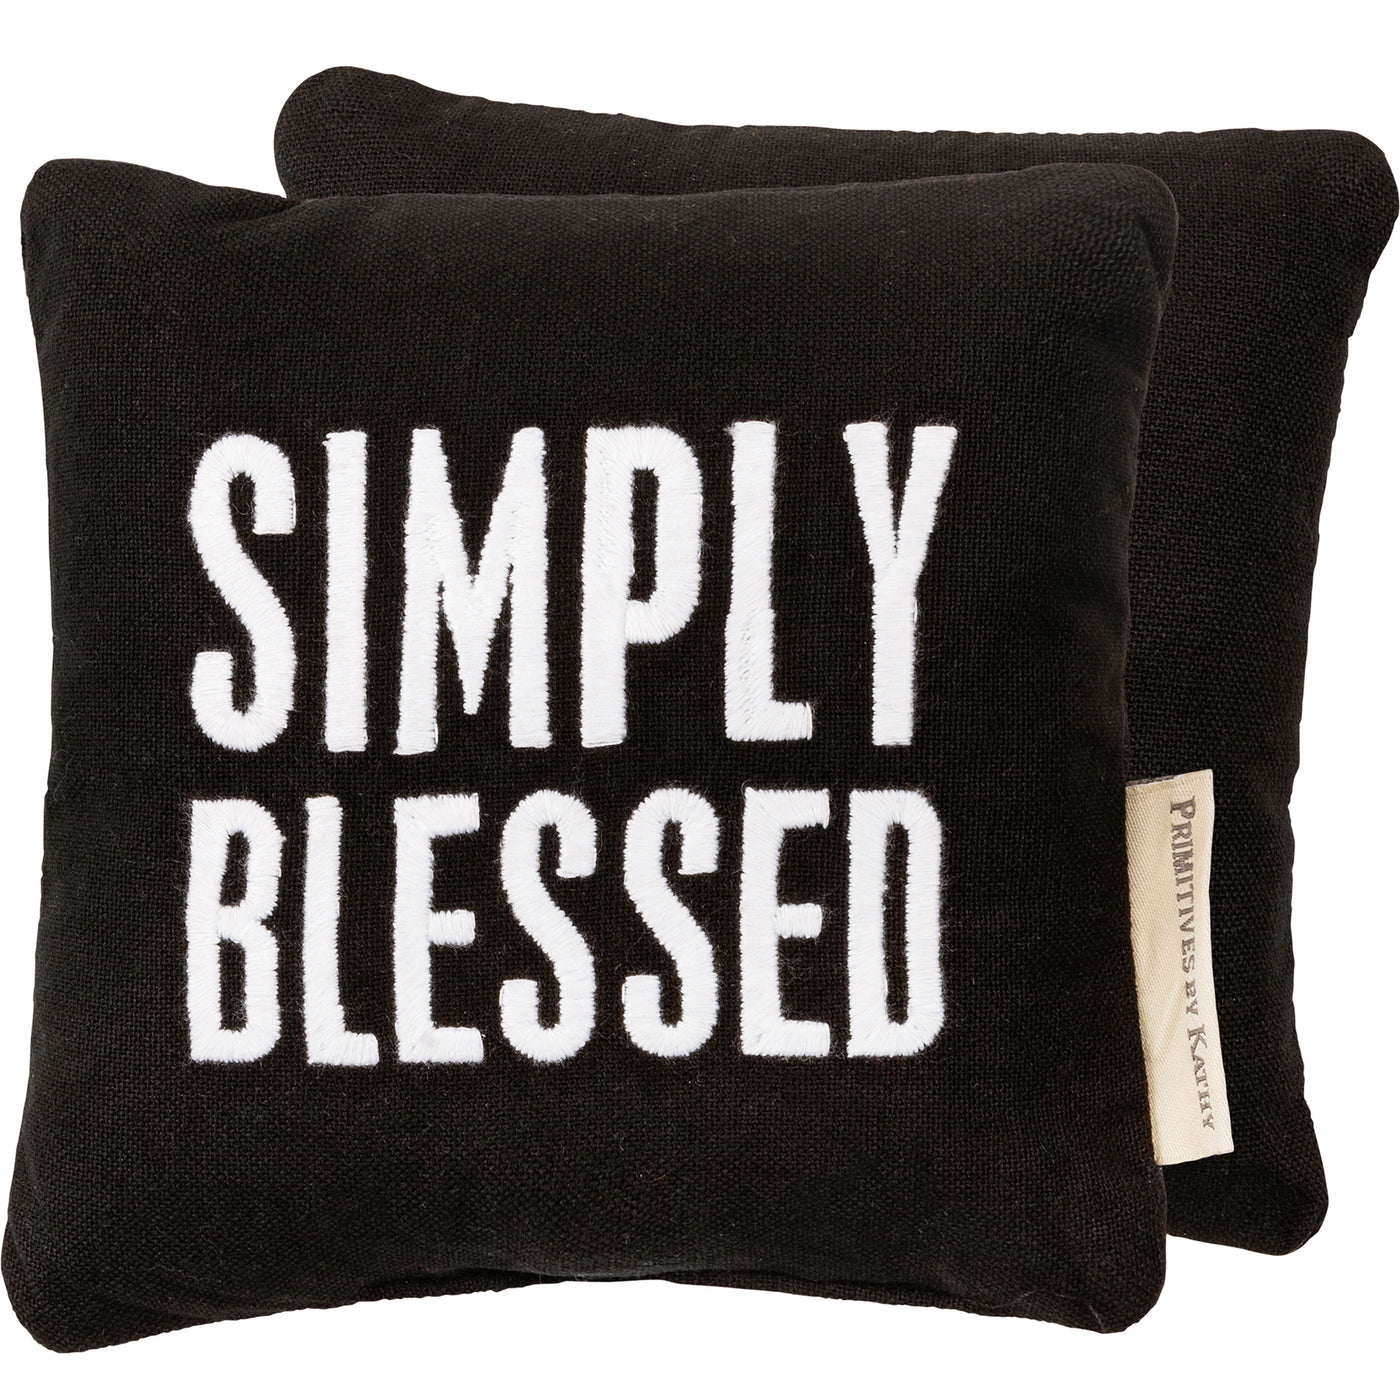 Surprise Me Sale 🤭 Simply Blessed Black & White 6" Mini Pillow